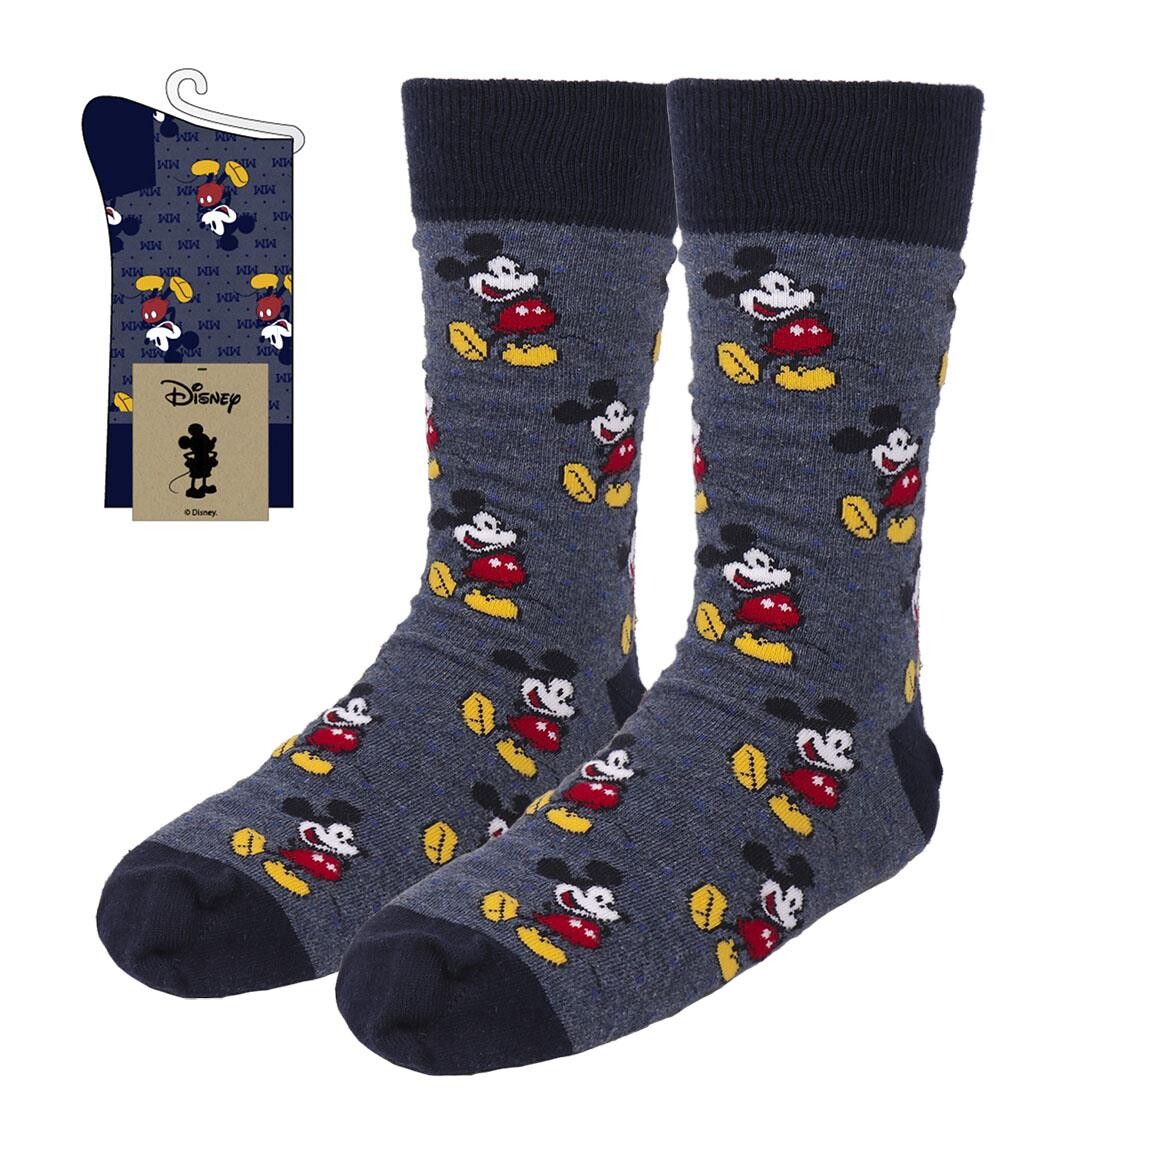 2020 Stance x Vintage Disney Minnie Mouse Socks Large Men's 9-13 Mickey Mouse 